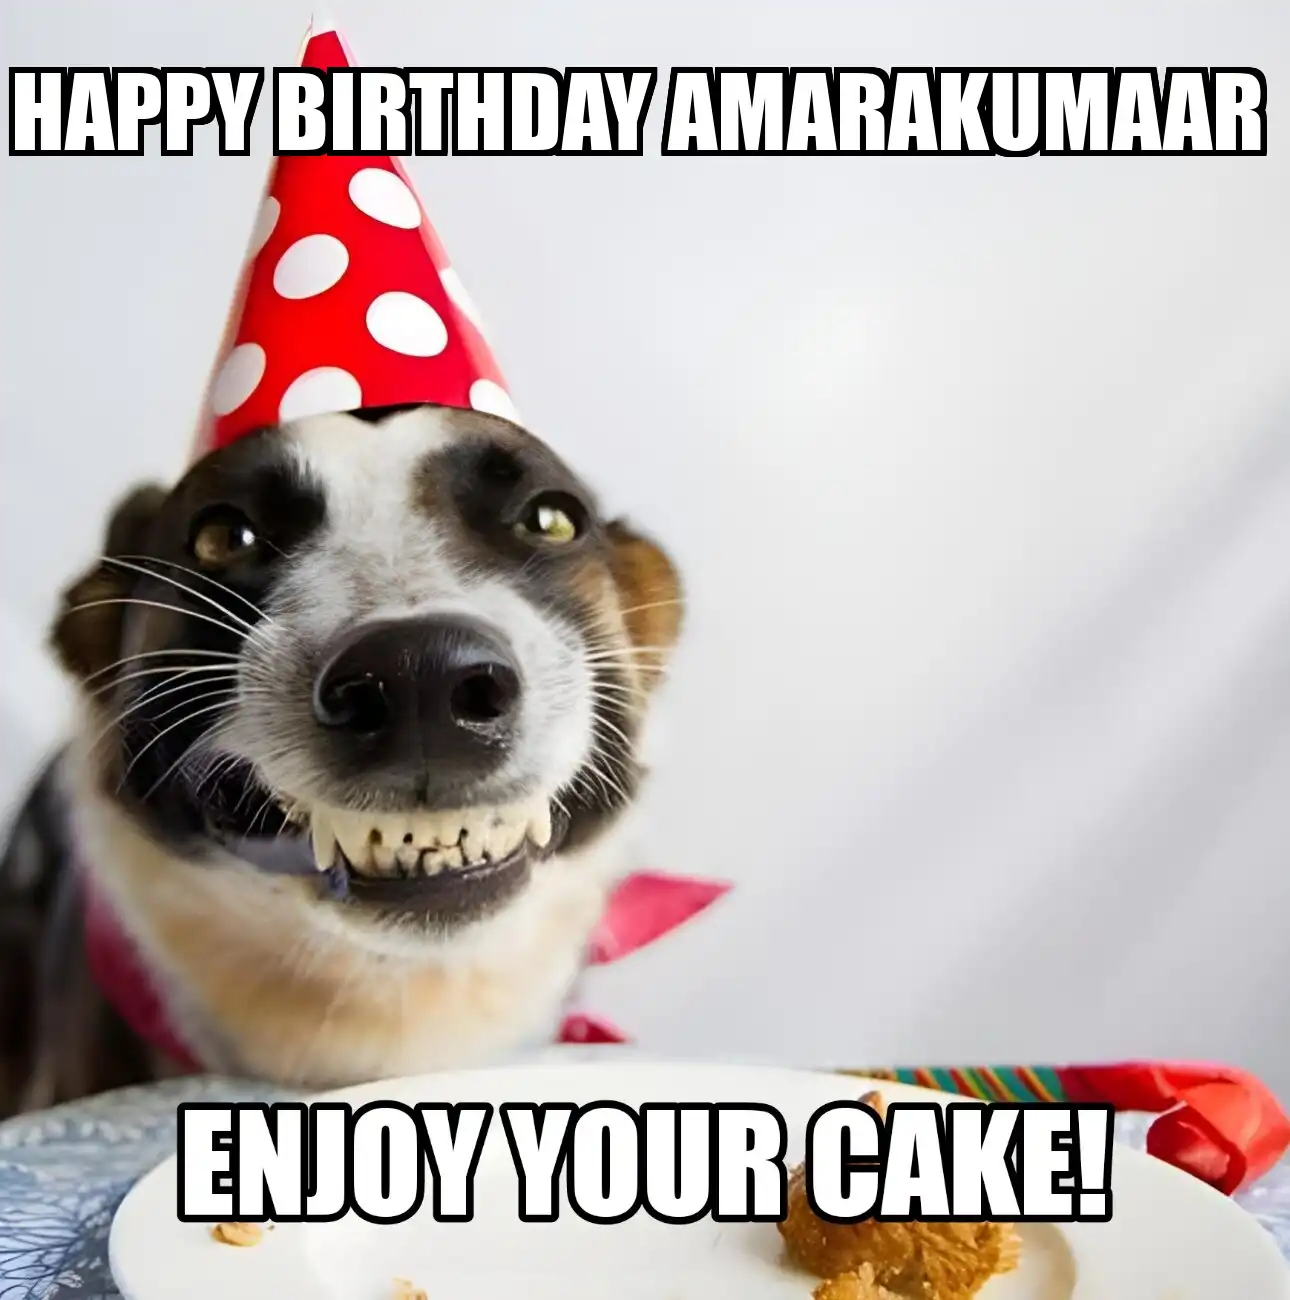 Happy Birthday Amarakumaar Enjoy Your Cake Dog Meme